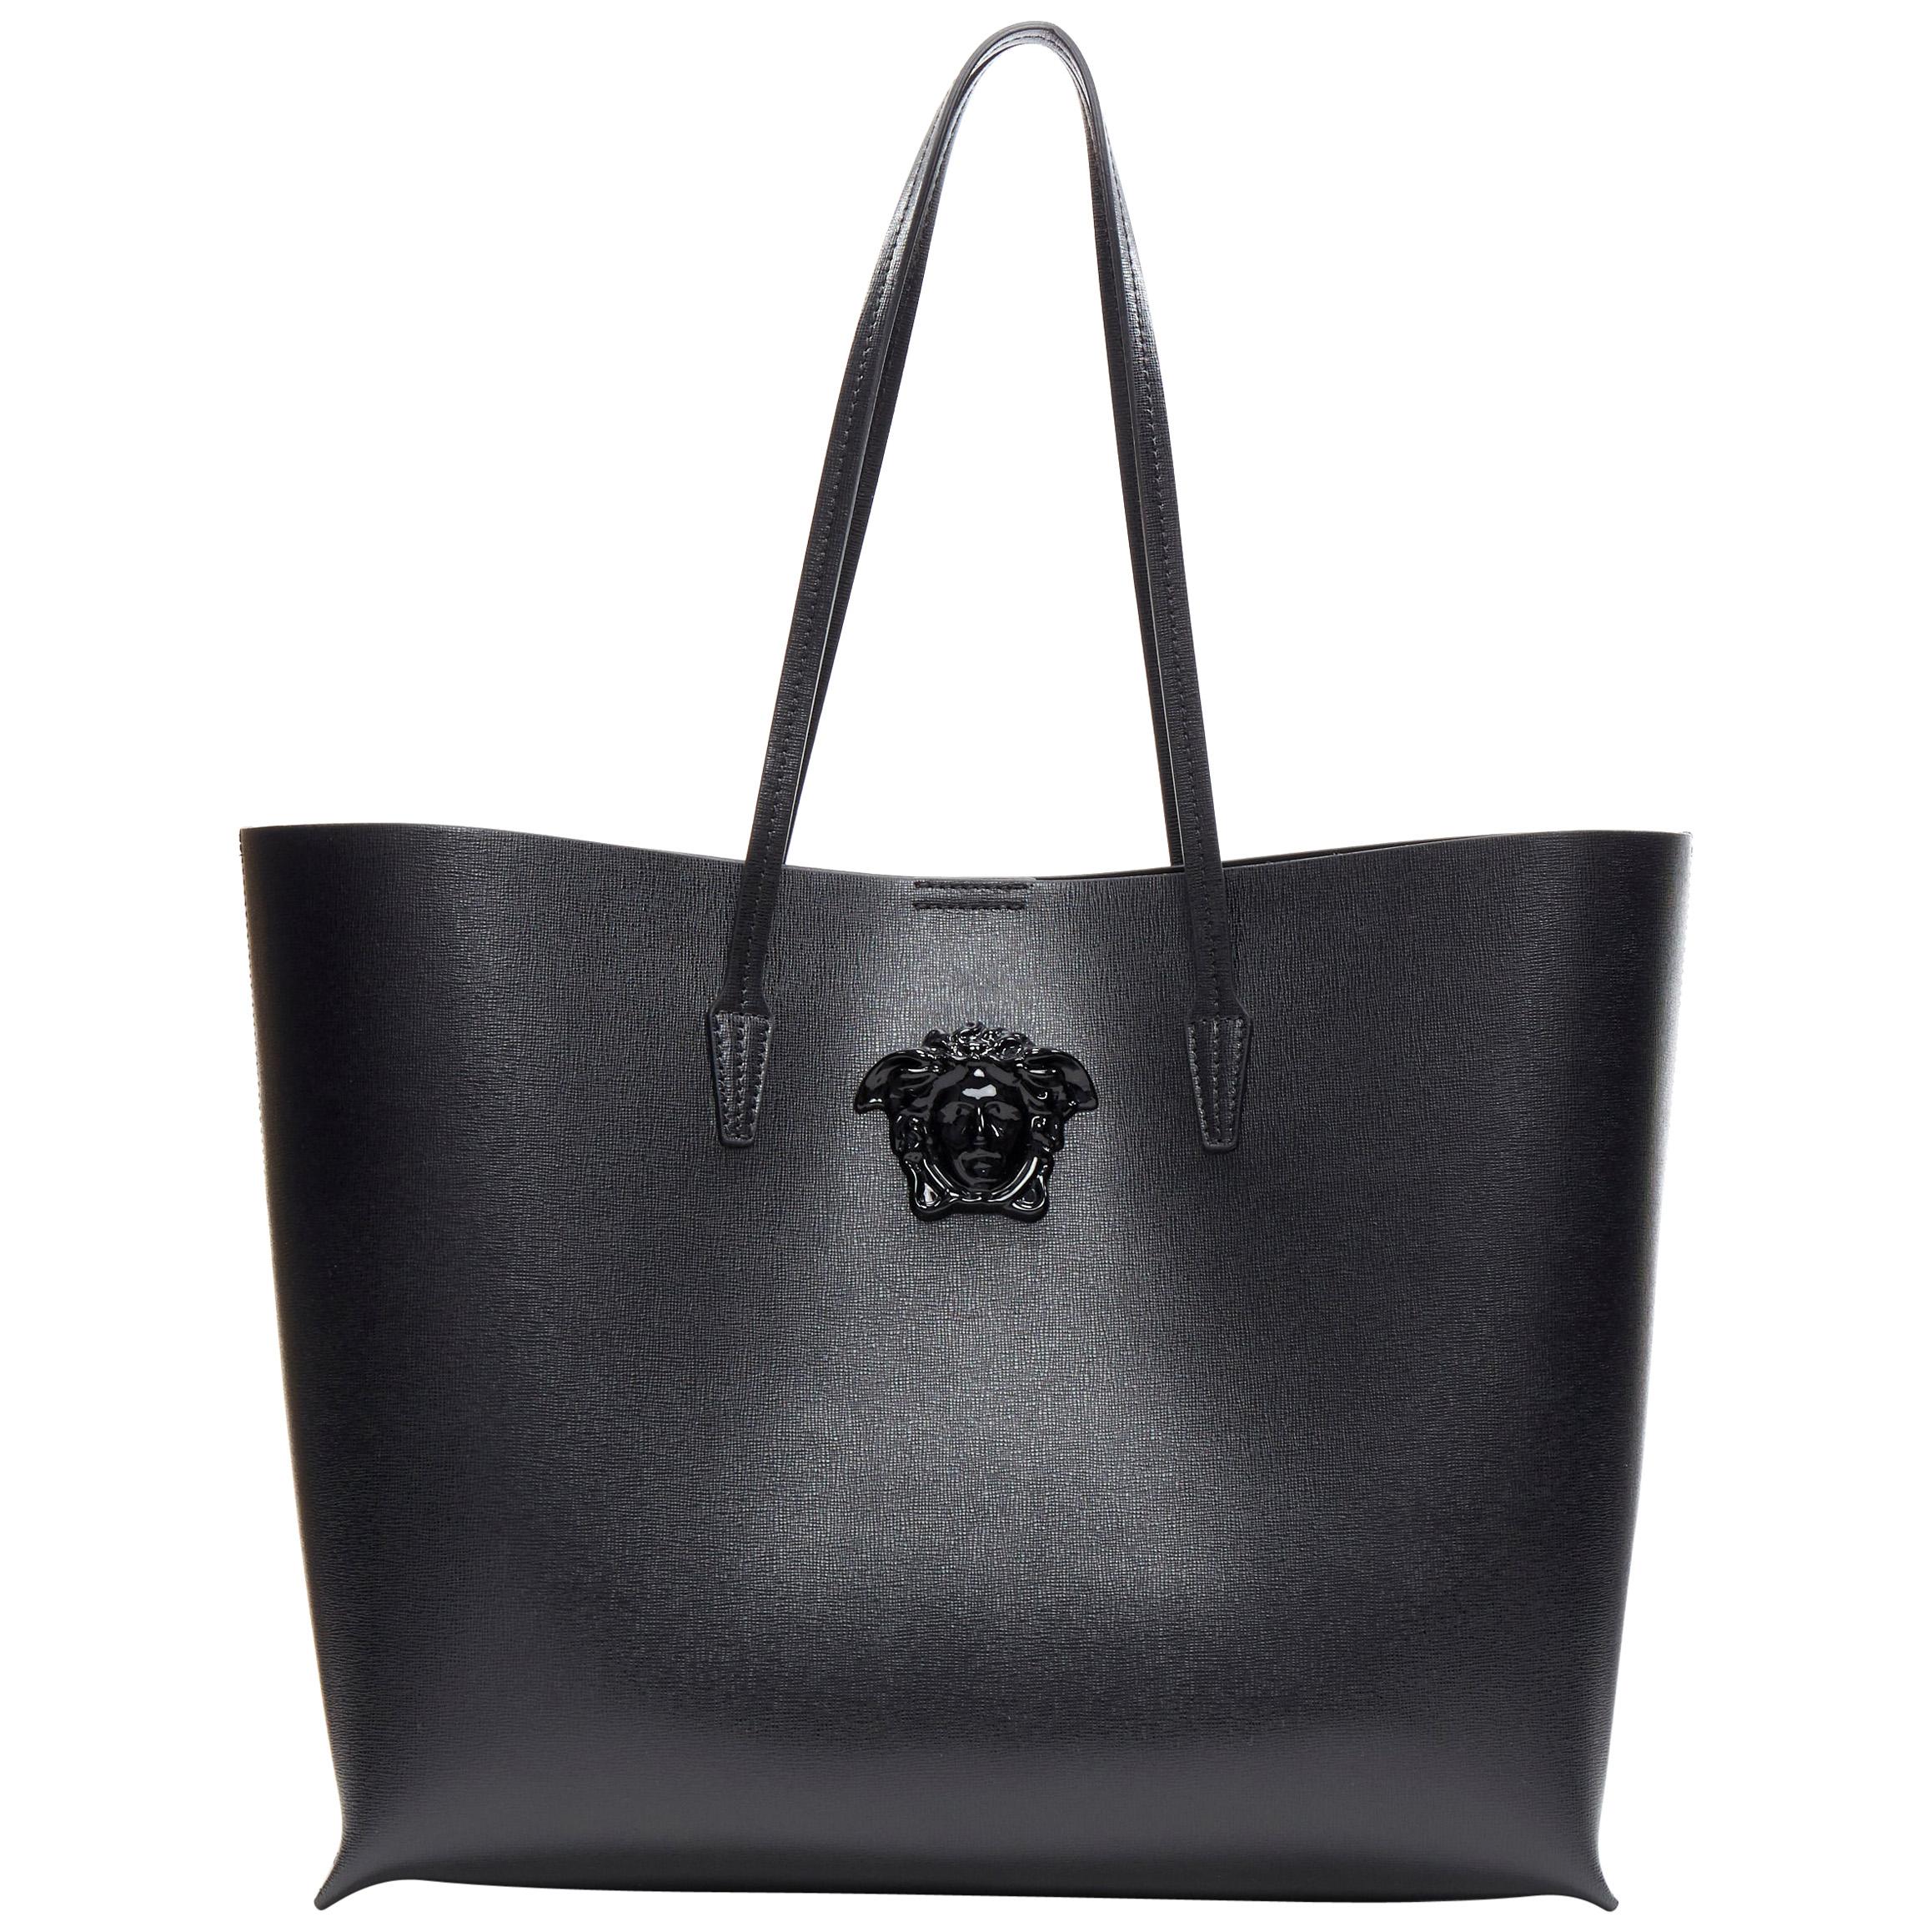 new VERSACE Palazzo Medusa black calf saffiano leather large neverfull tote bag